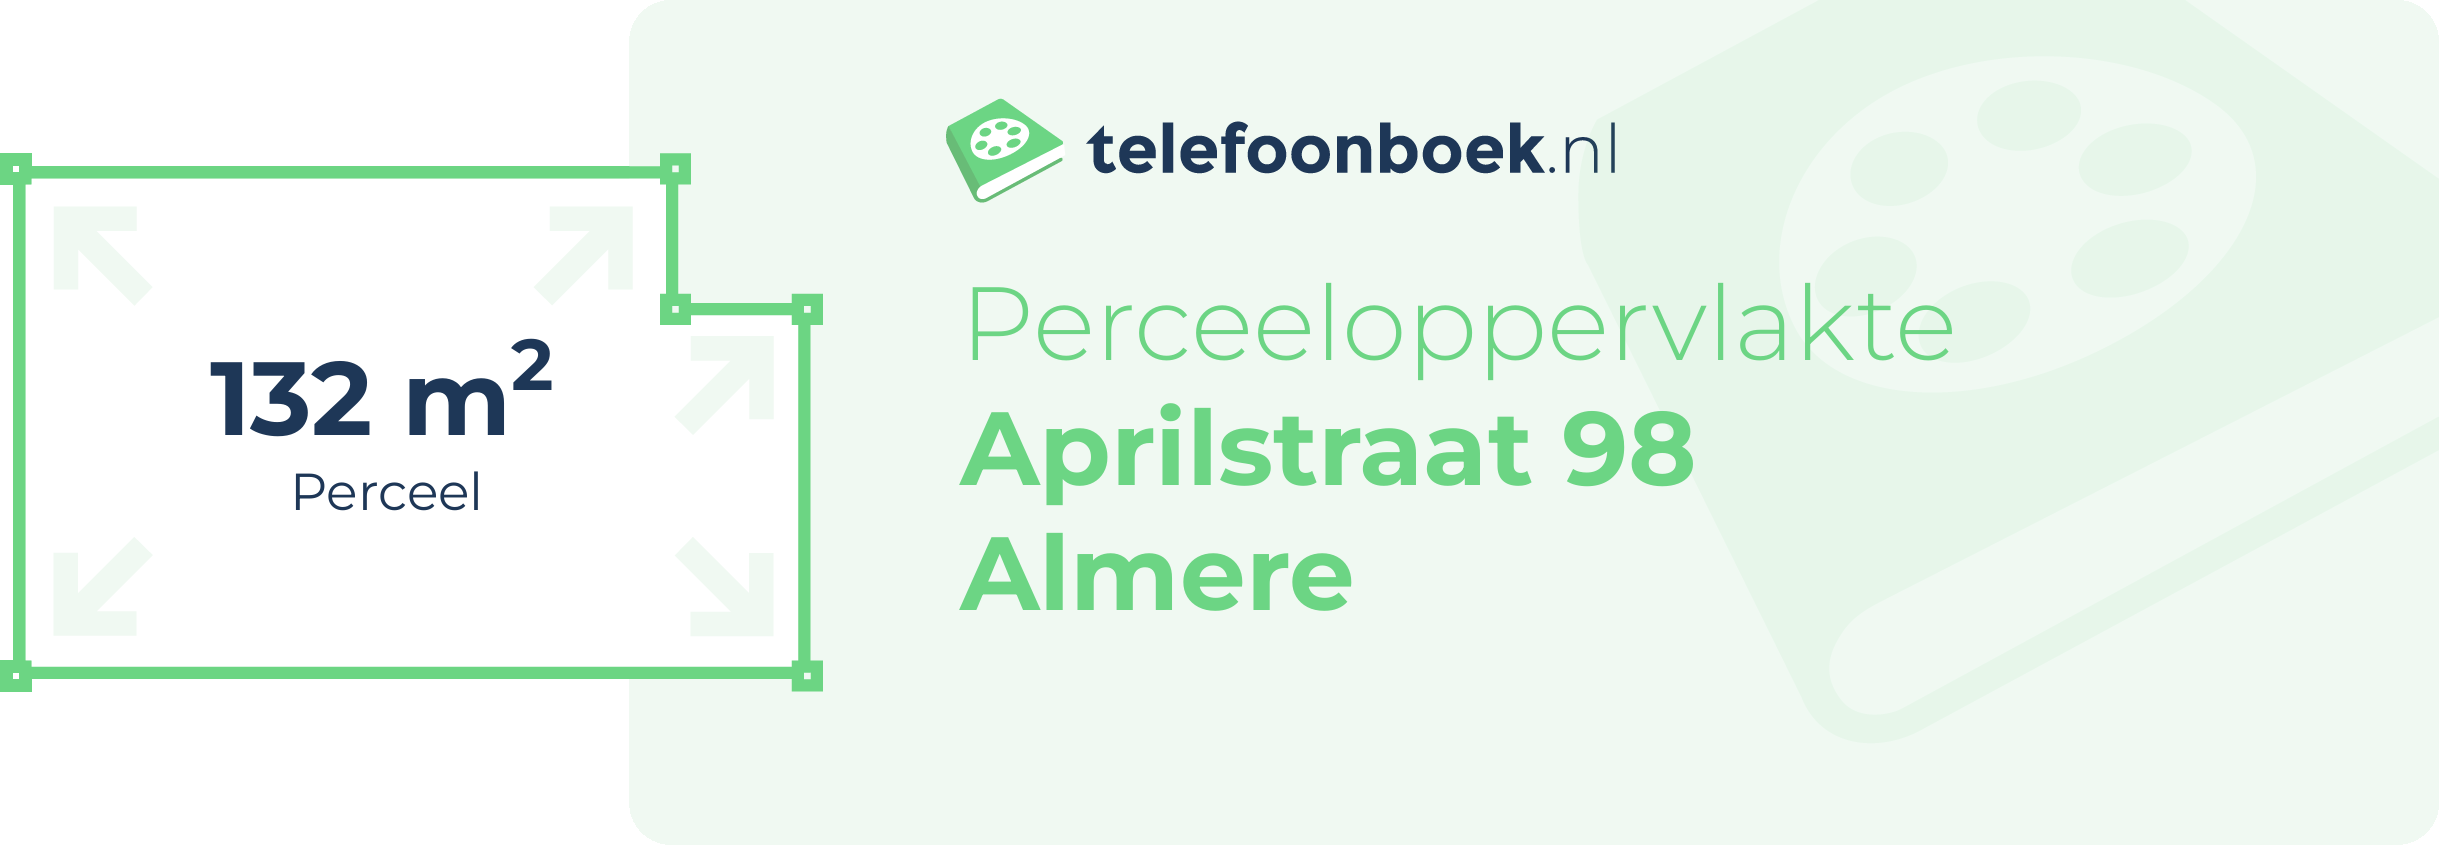 Perceeloppervlakte Aprilstraat 98 Almere